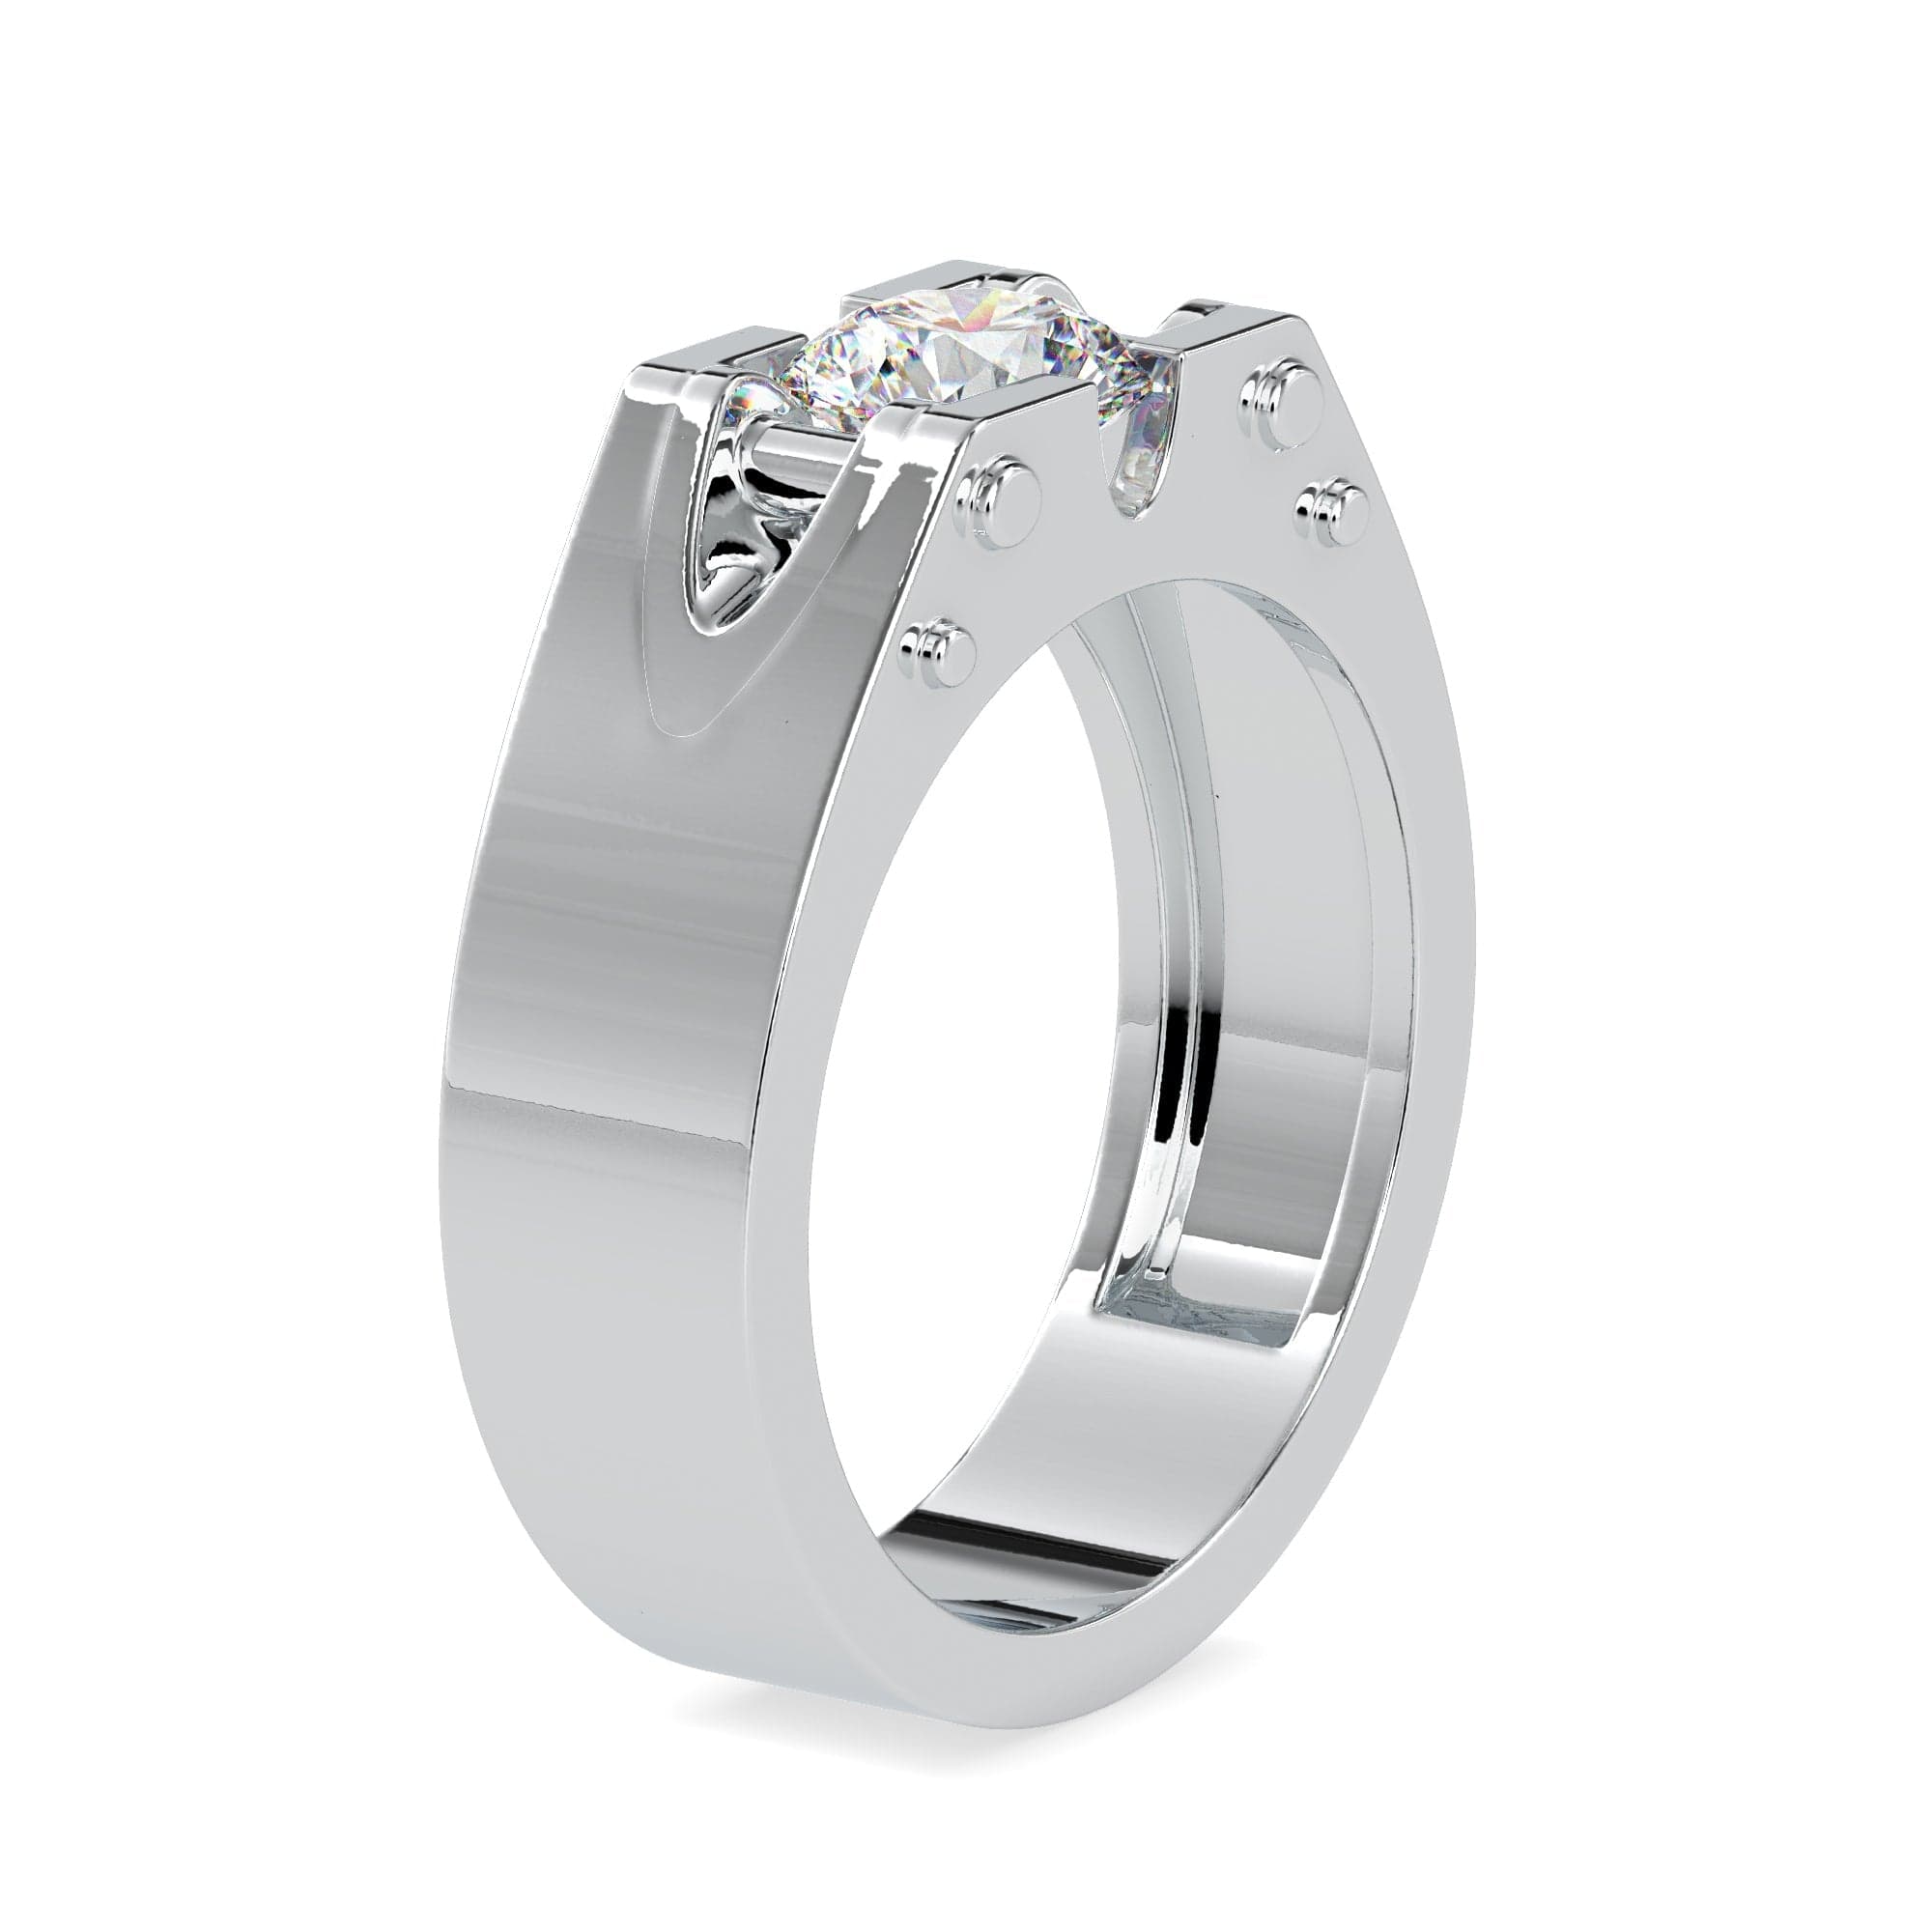 Princess Engagement Men''s Solitaire Diamond Ring at Rs 85000 in Mumbai